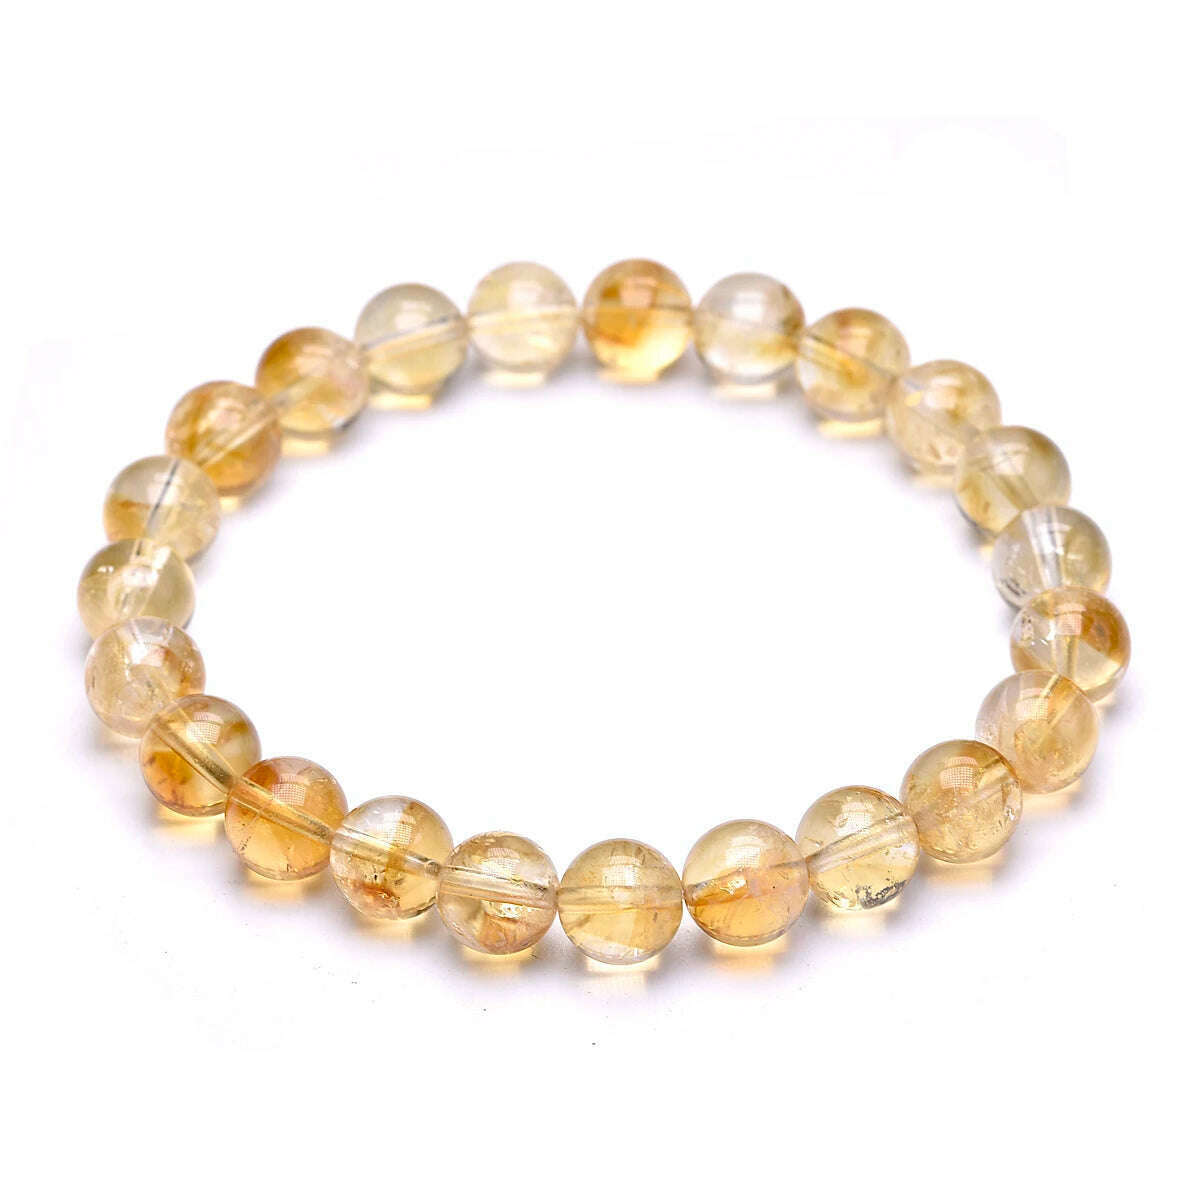 KIMLUD, 3A Natural Reiki Healing Energy Yelllow Citrine Quartz Chakra Meditation Degausst Beads Bracelets For Women Men Lucky Jewelry, Beads 8mm / 16cm, KIMLUD Women's Clothes